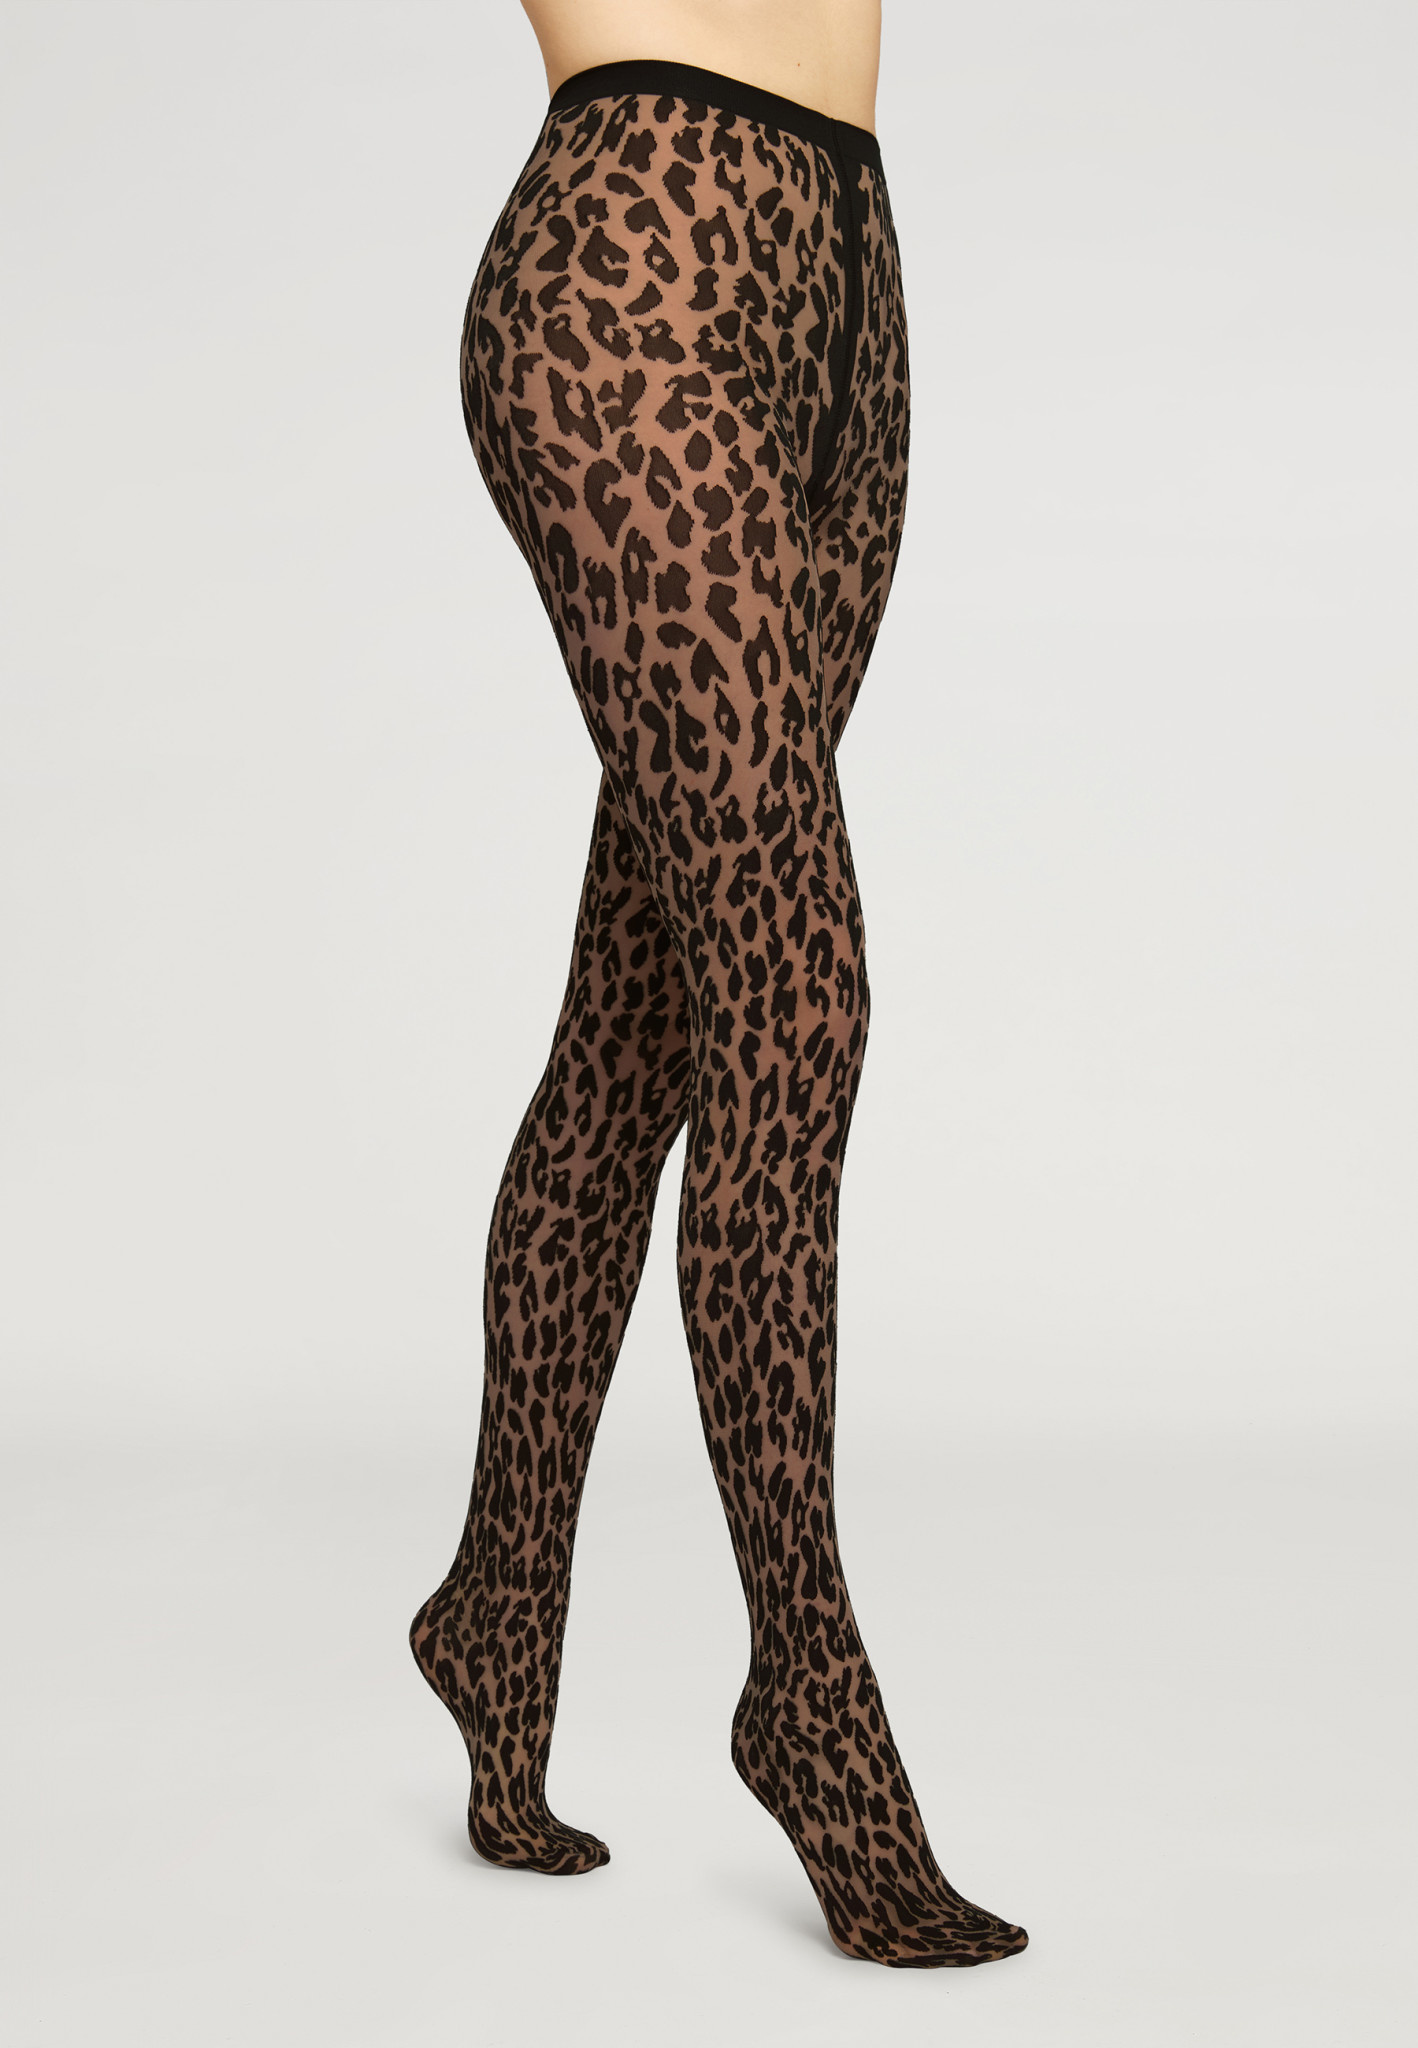 Leopard Printed Footless Tights for Women Fashion Cheetah Print 